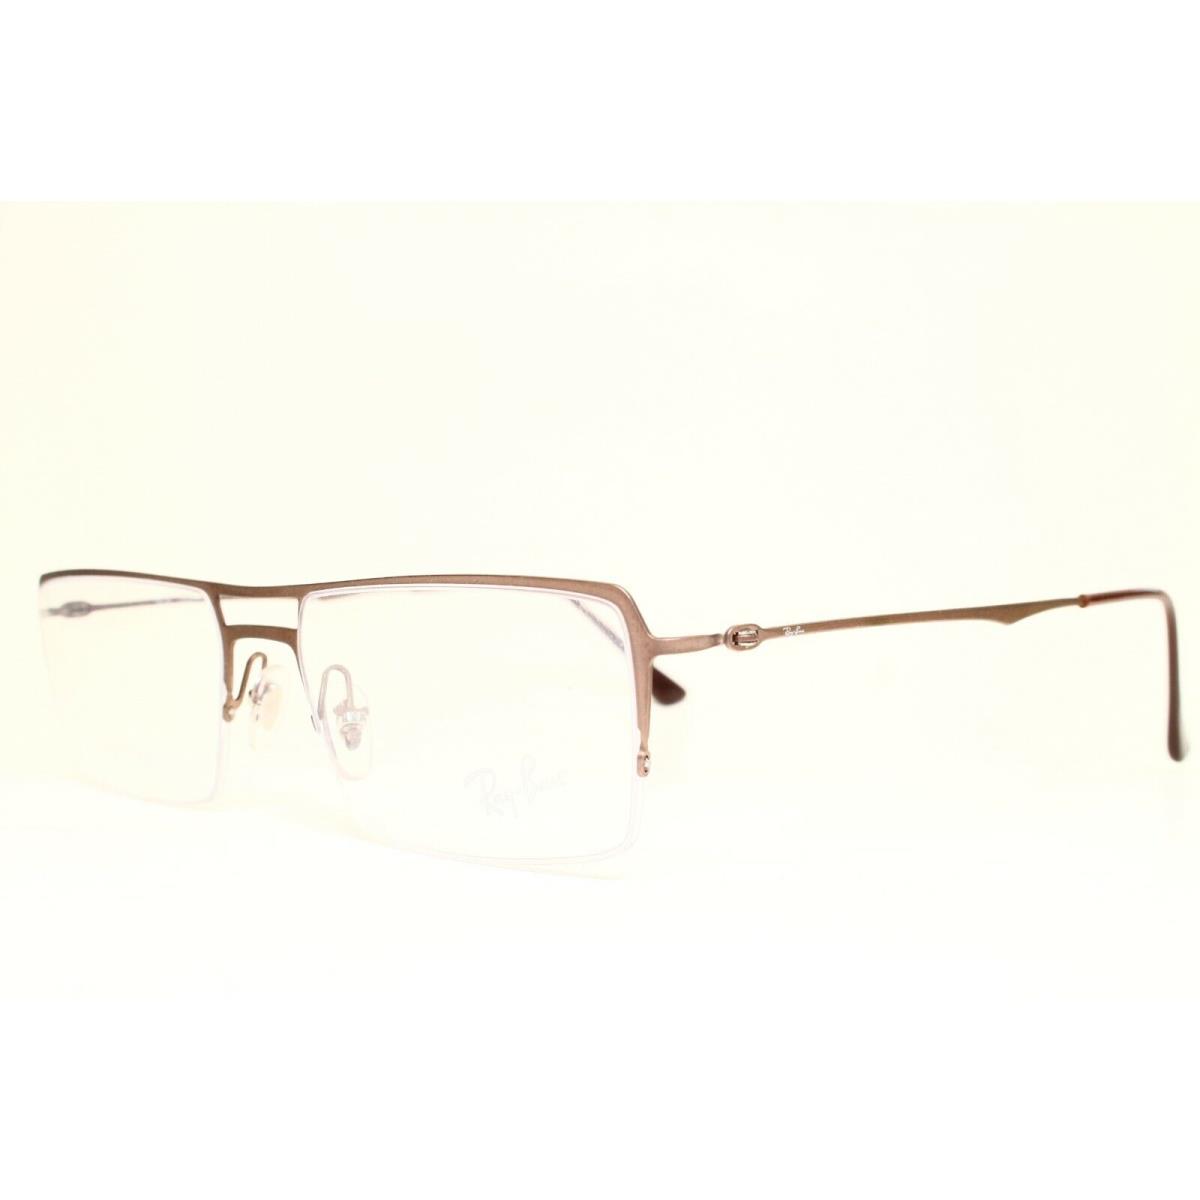 Ray Ban RB8713 1157 Brown Eyeglasses Frame RB 8713 RX 55-17 AA56